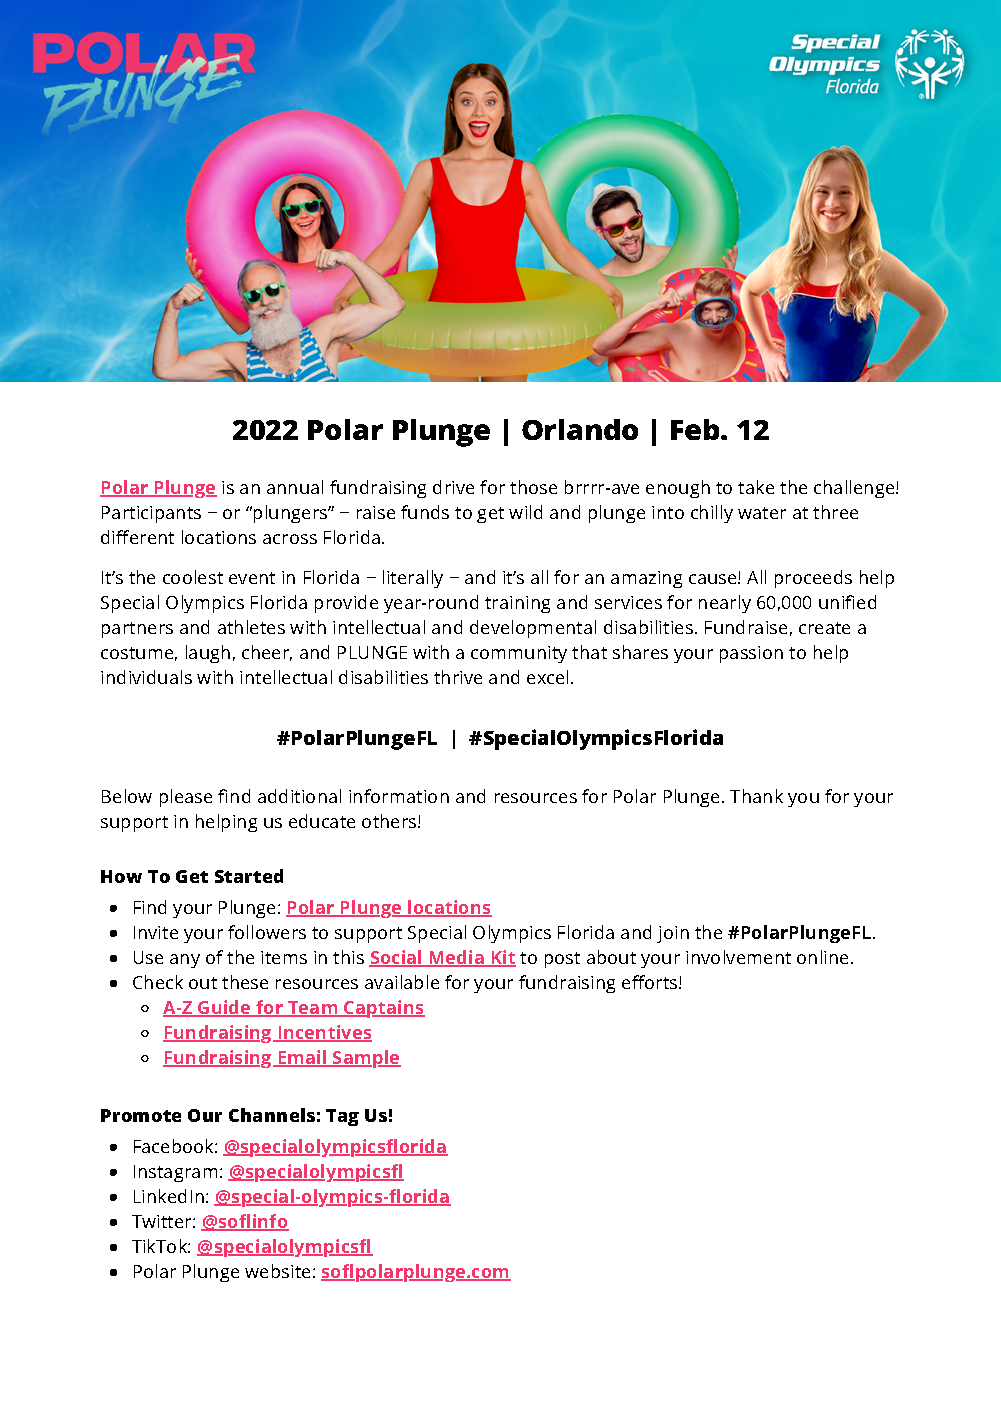 Polar Plunge Tampa - Read First